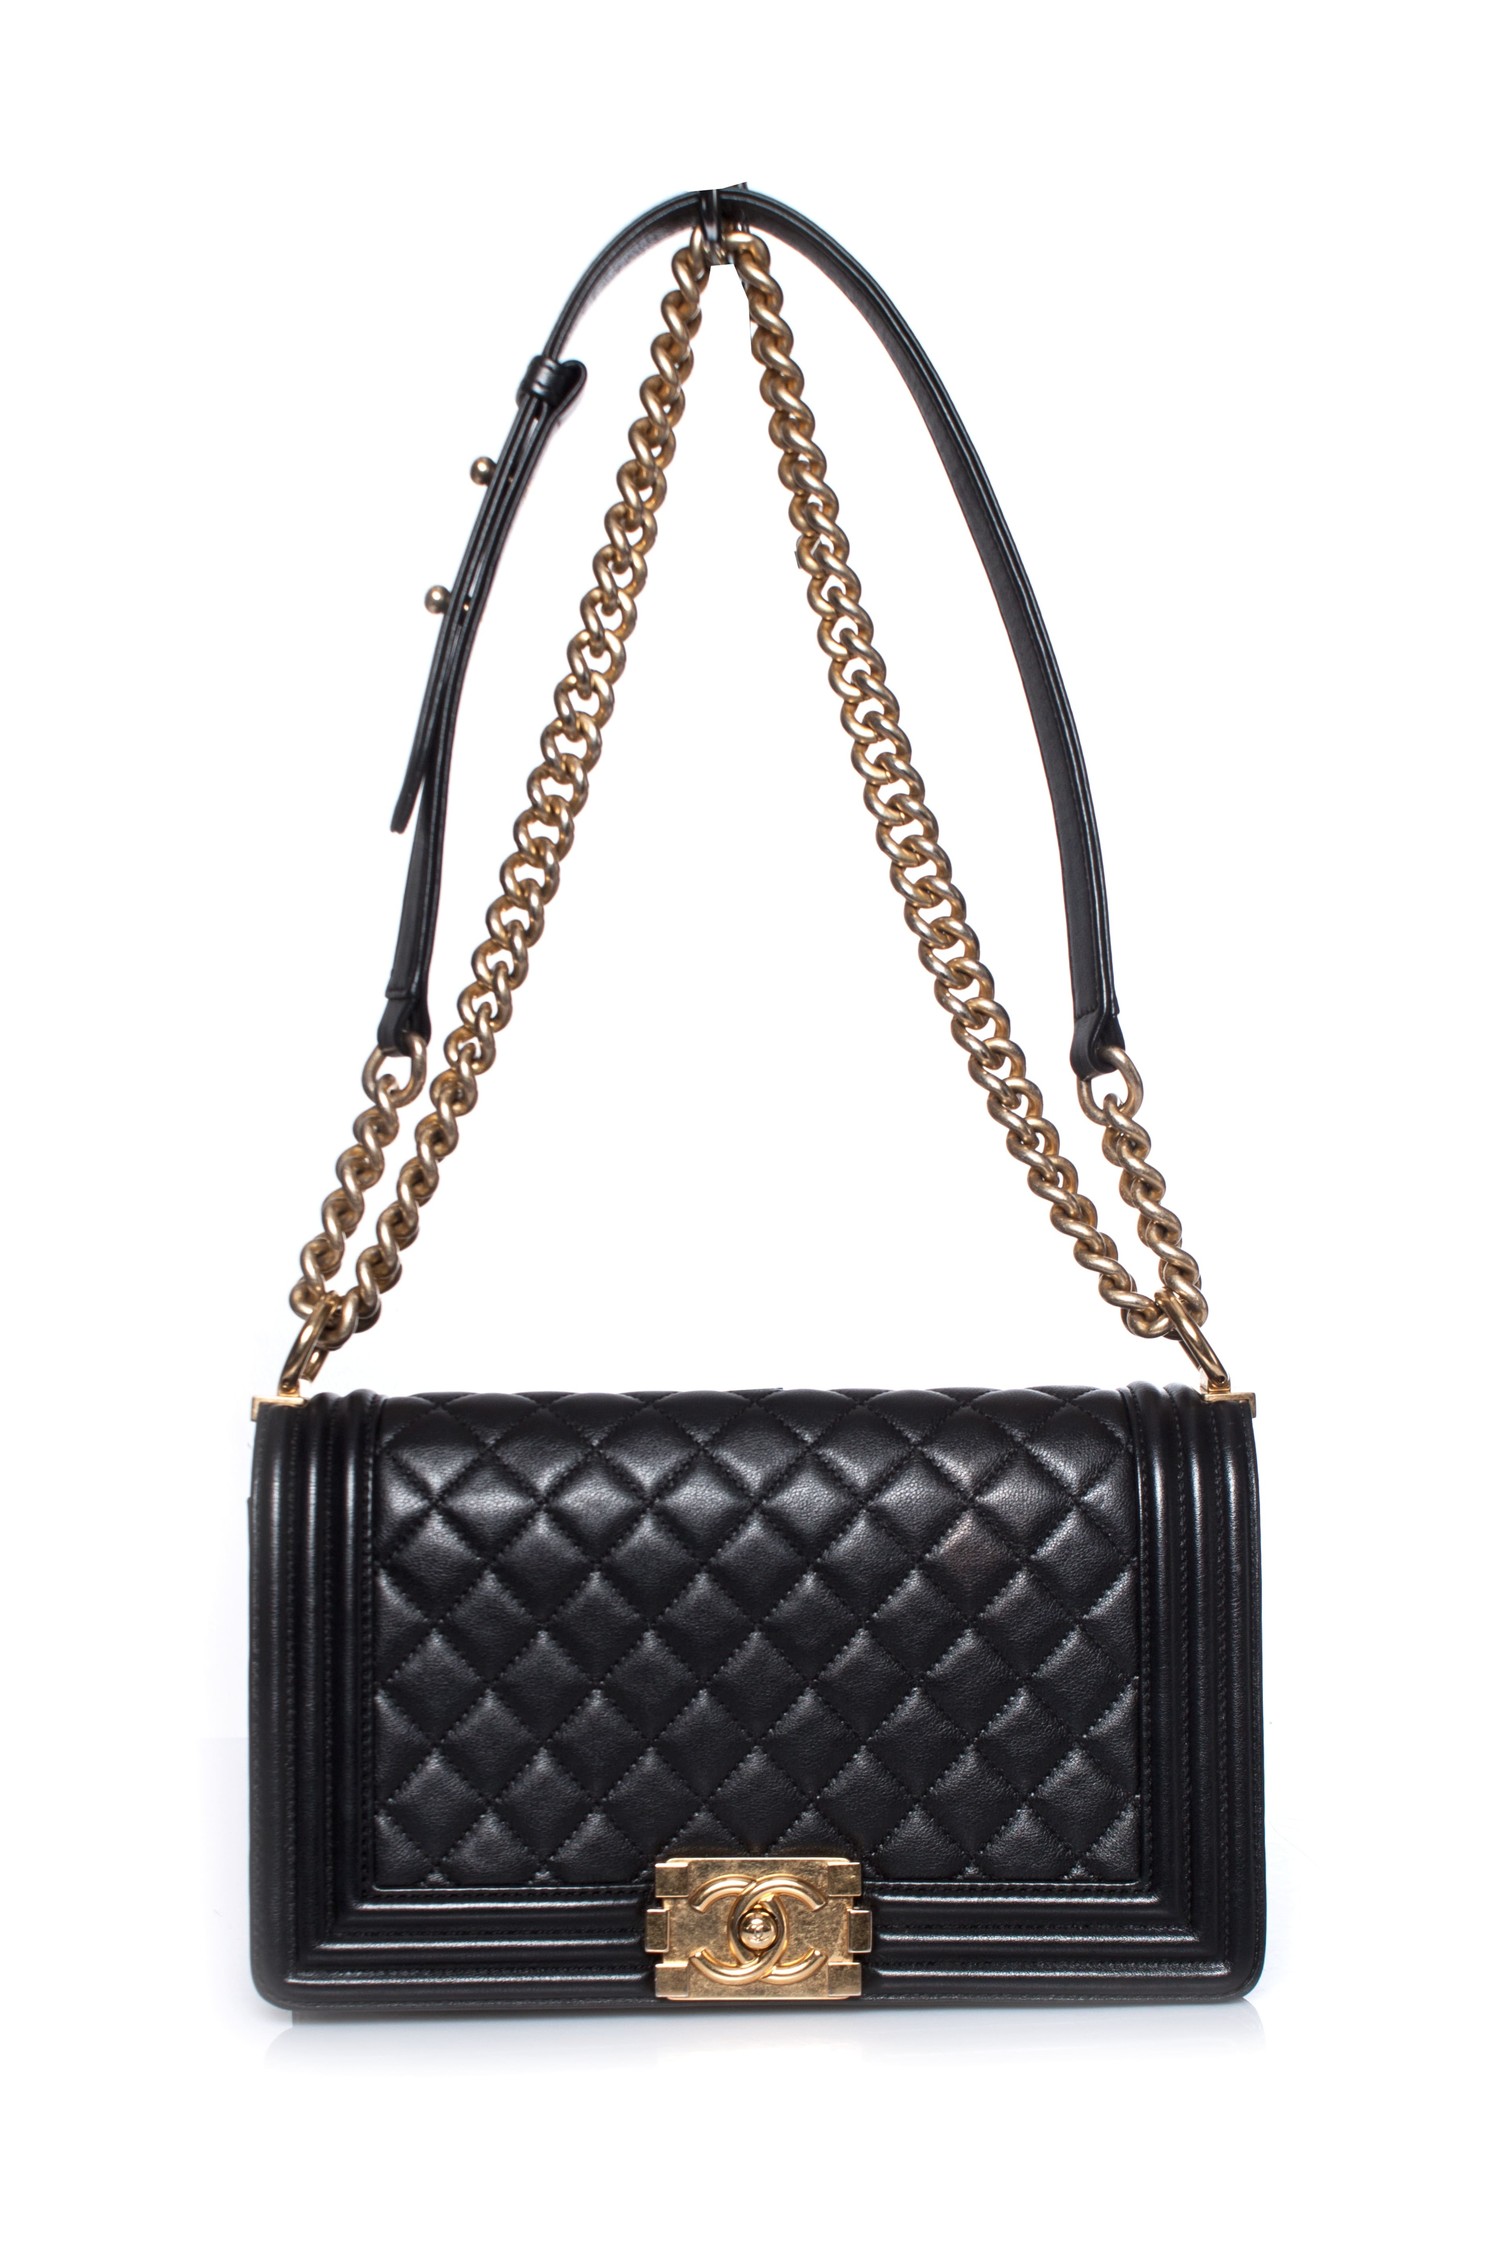 Chanel, Boy Bag Medium in black quilted calf leather - Unique Designer ...